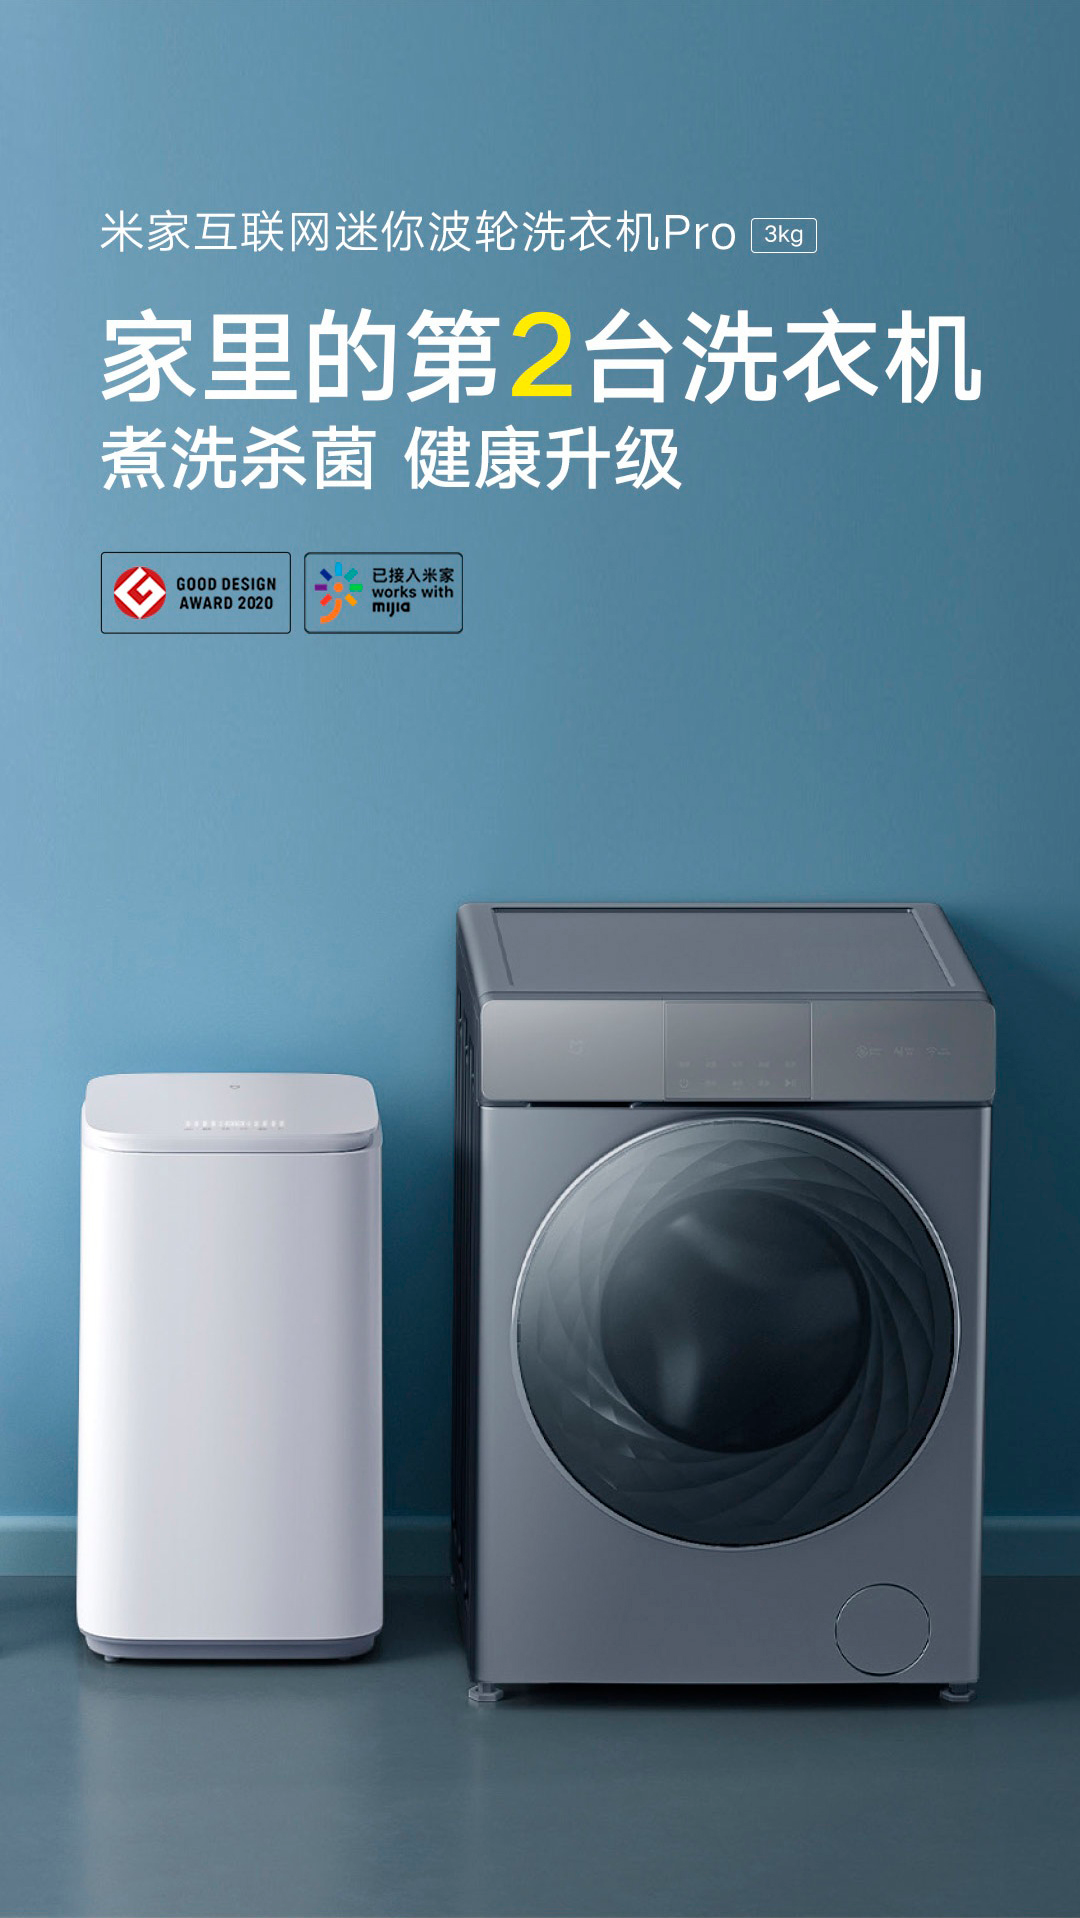 Стиральная машина xiaomi купить. Стиральная машина Xiaomi Mijia. Умная стиральная машина Xiaomi Mijia Internet Mini Pulsator Pro 3 kg (xqb30mj101). Xiaomi Mijia Mini washing Machine 3kg White. Xiaomi Mijia стиральная и сушильная машина 15kg.